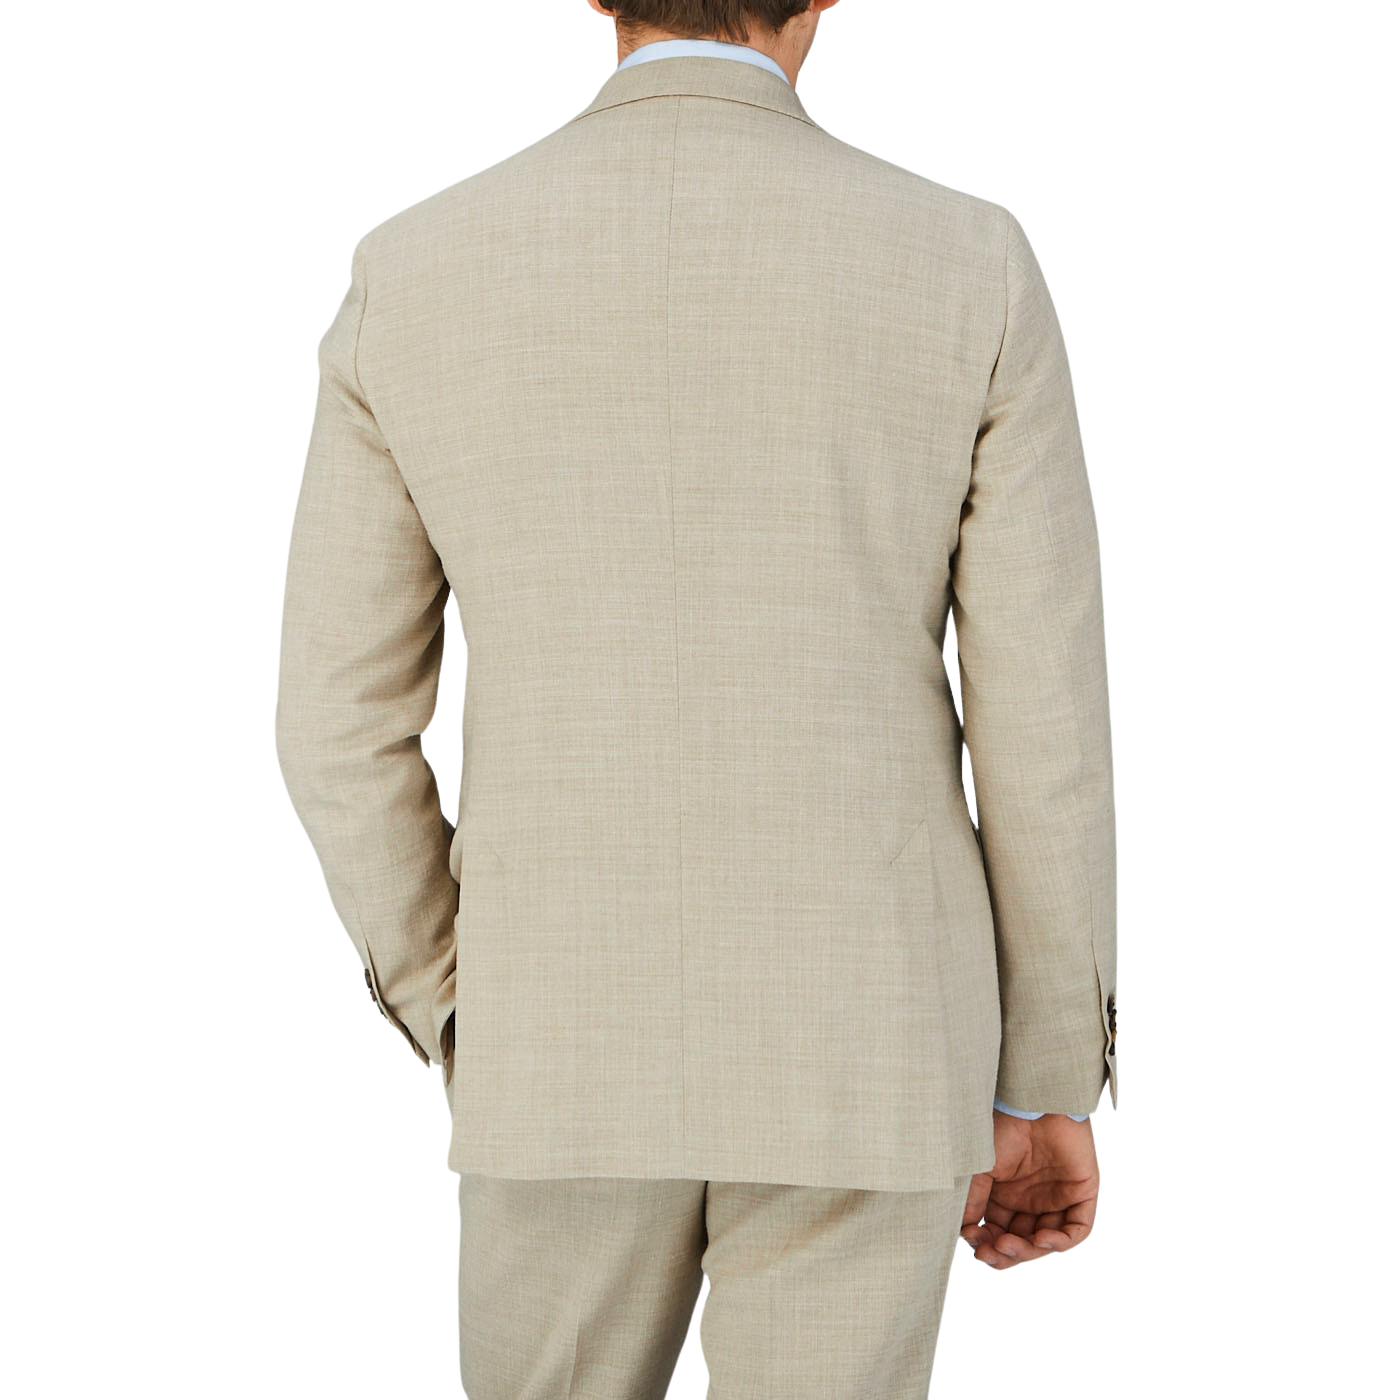 The back view of a man wearing a Baltzar Sartorial Beige Melange Wool Linen Suit Jacket.